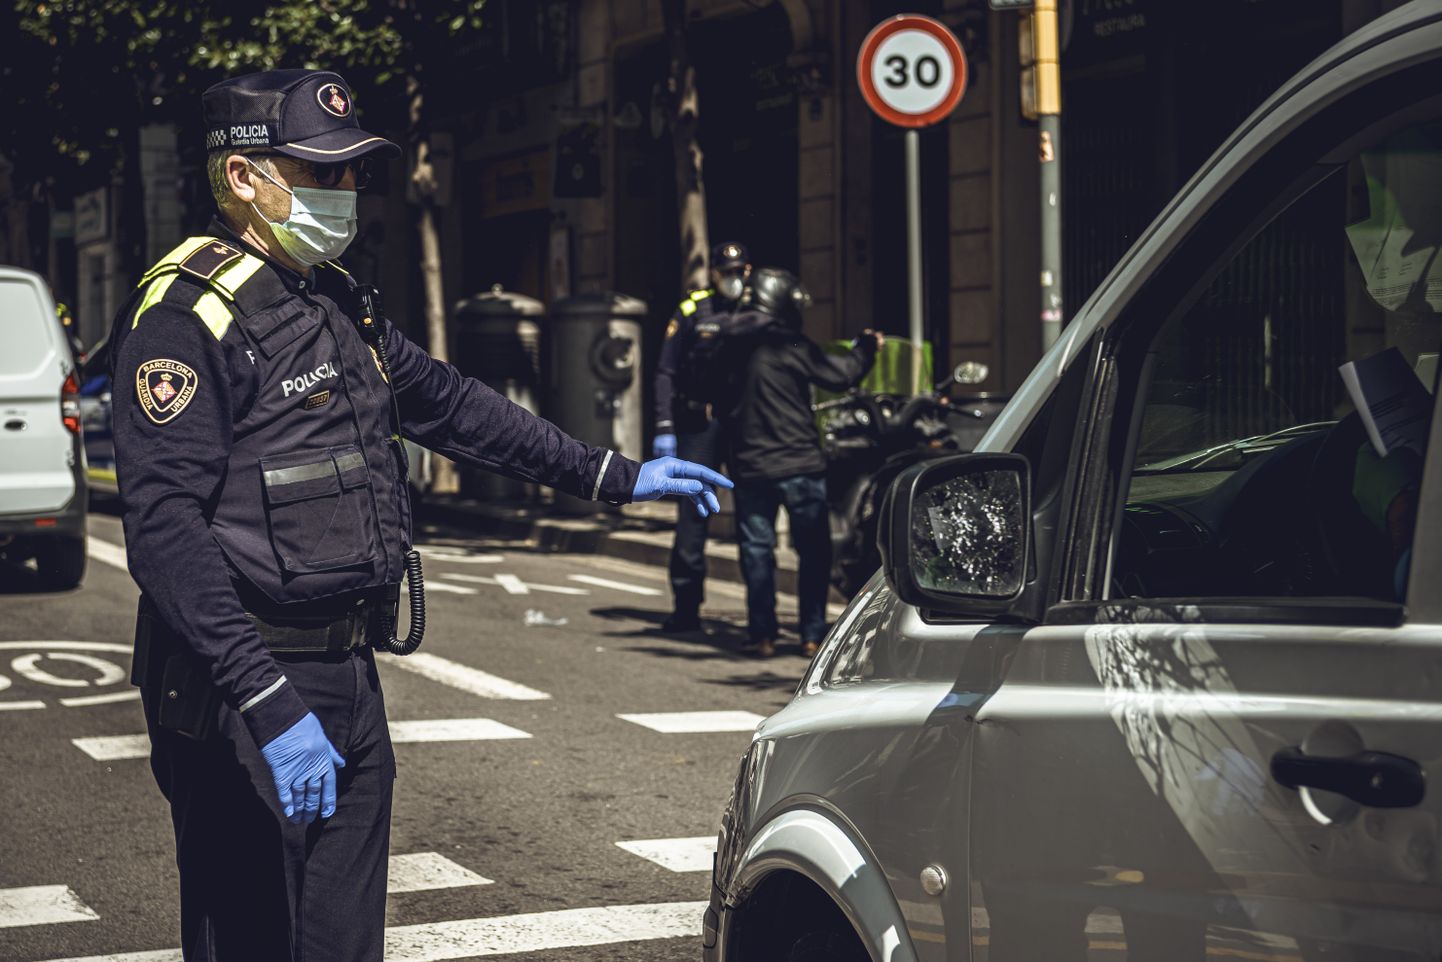 Barcelona politsei. Foto on illustratiivne.